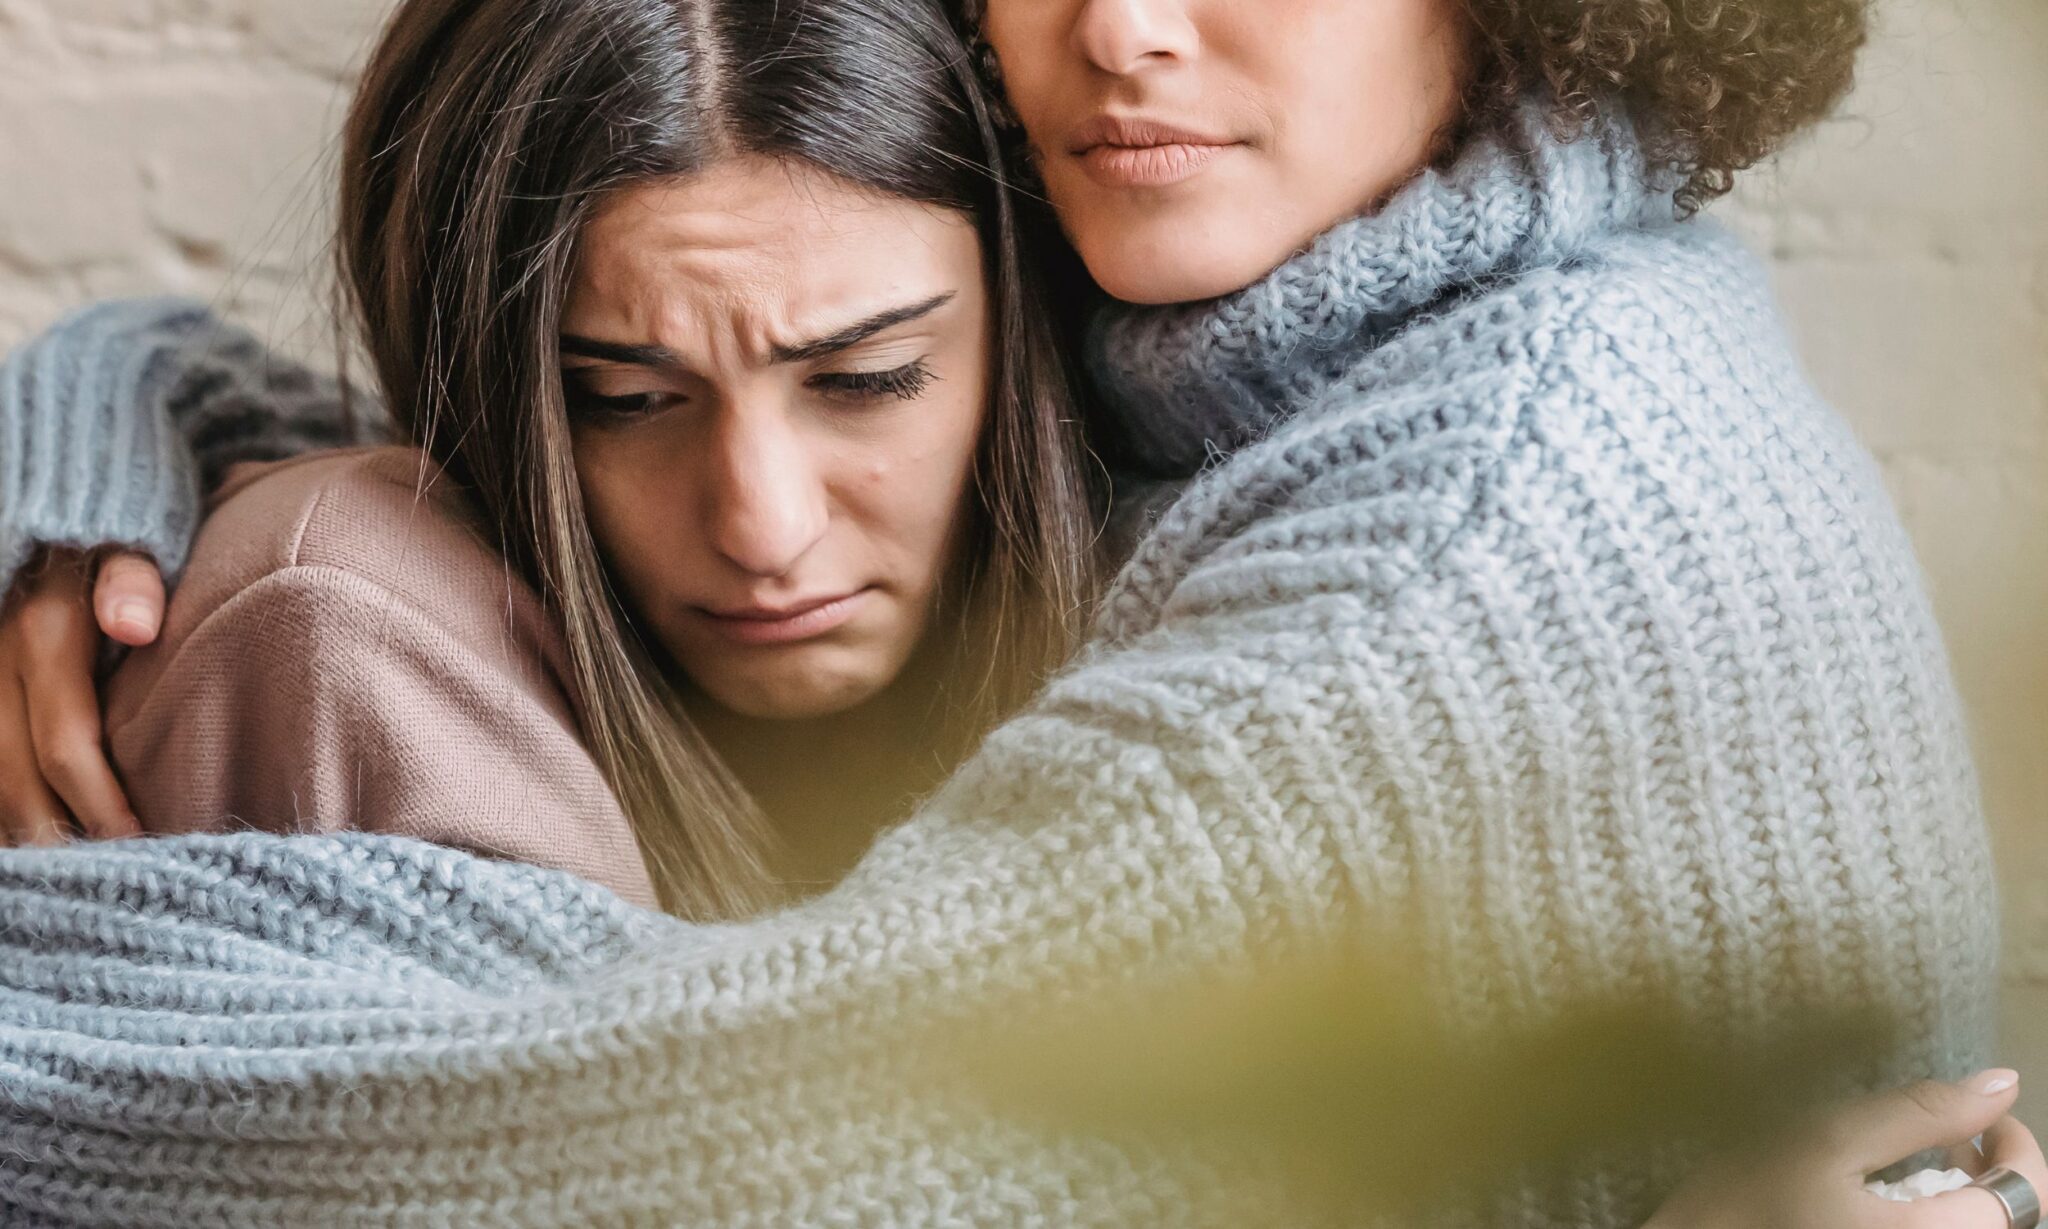 7 Ways To Support A Friend Going Through A Divorce